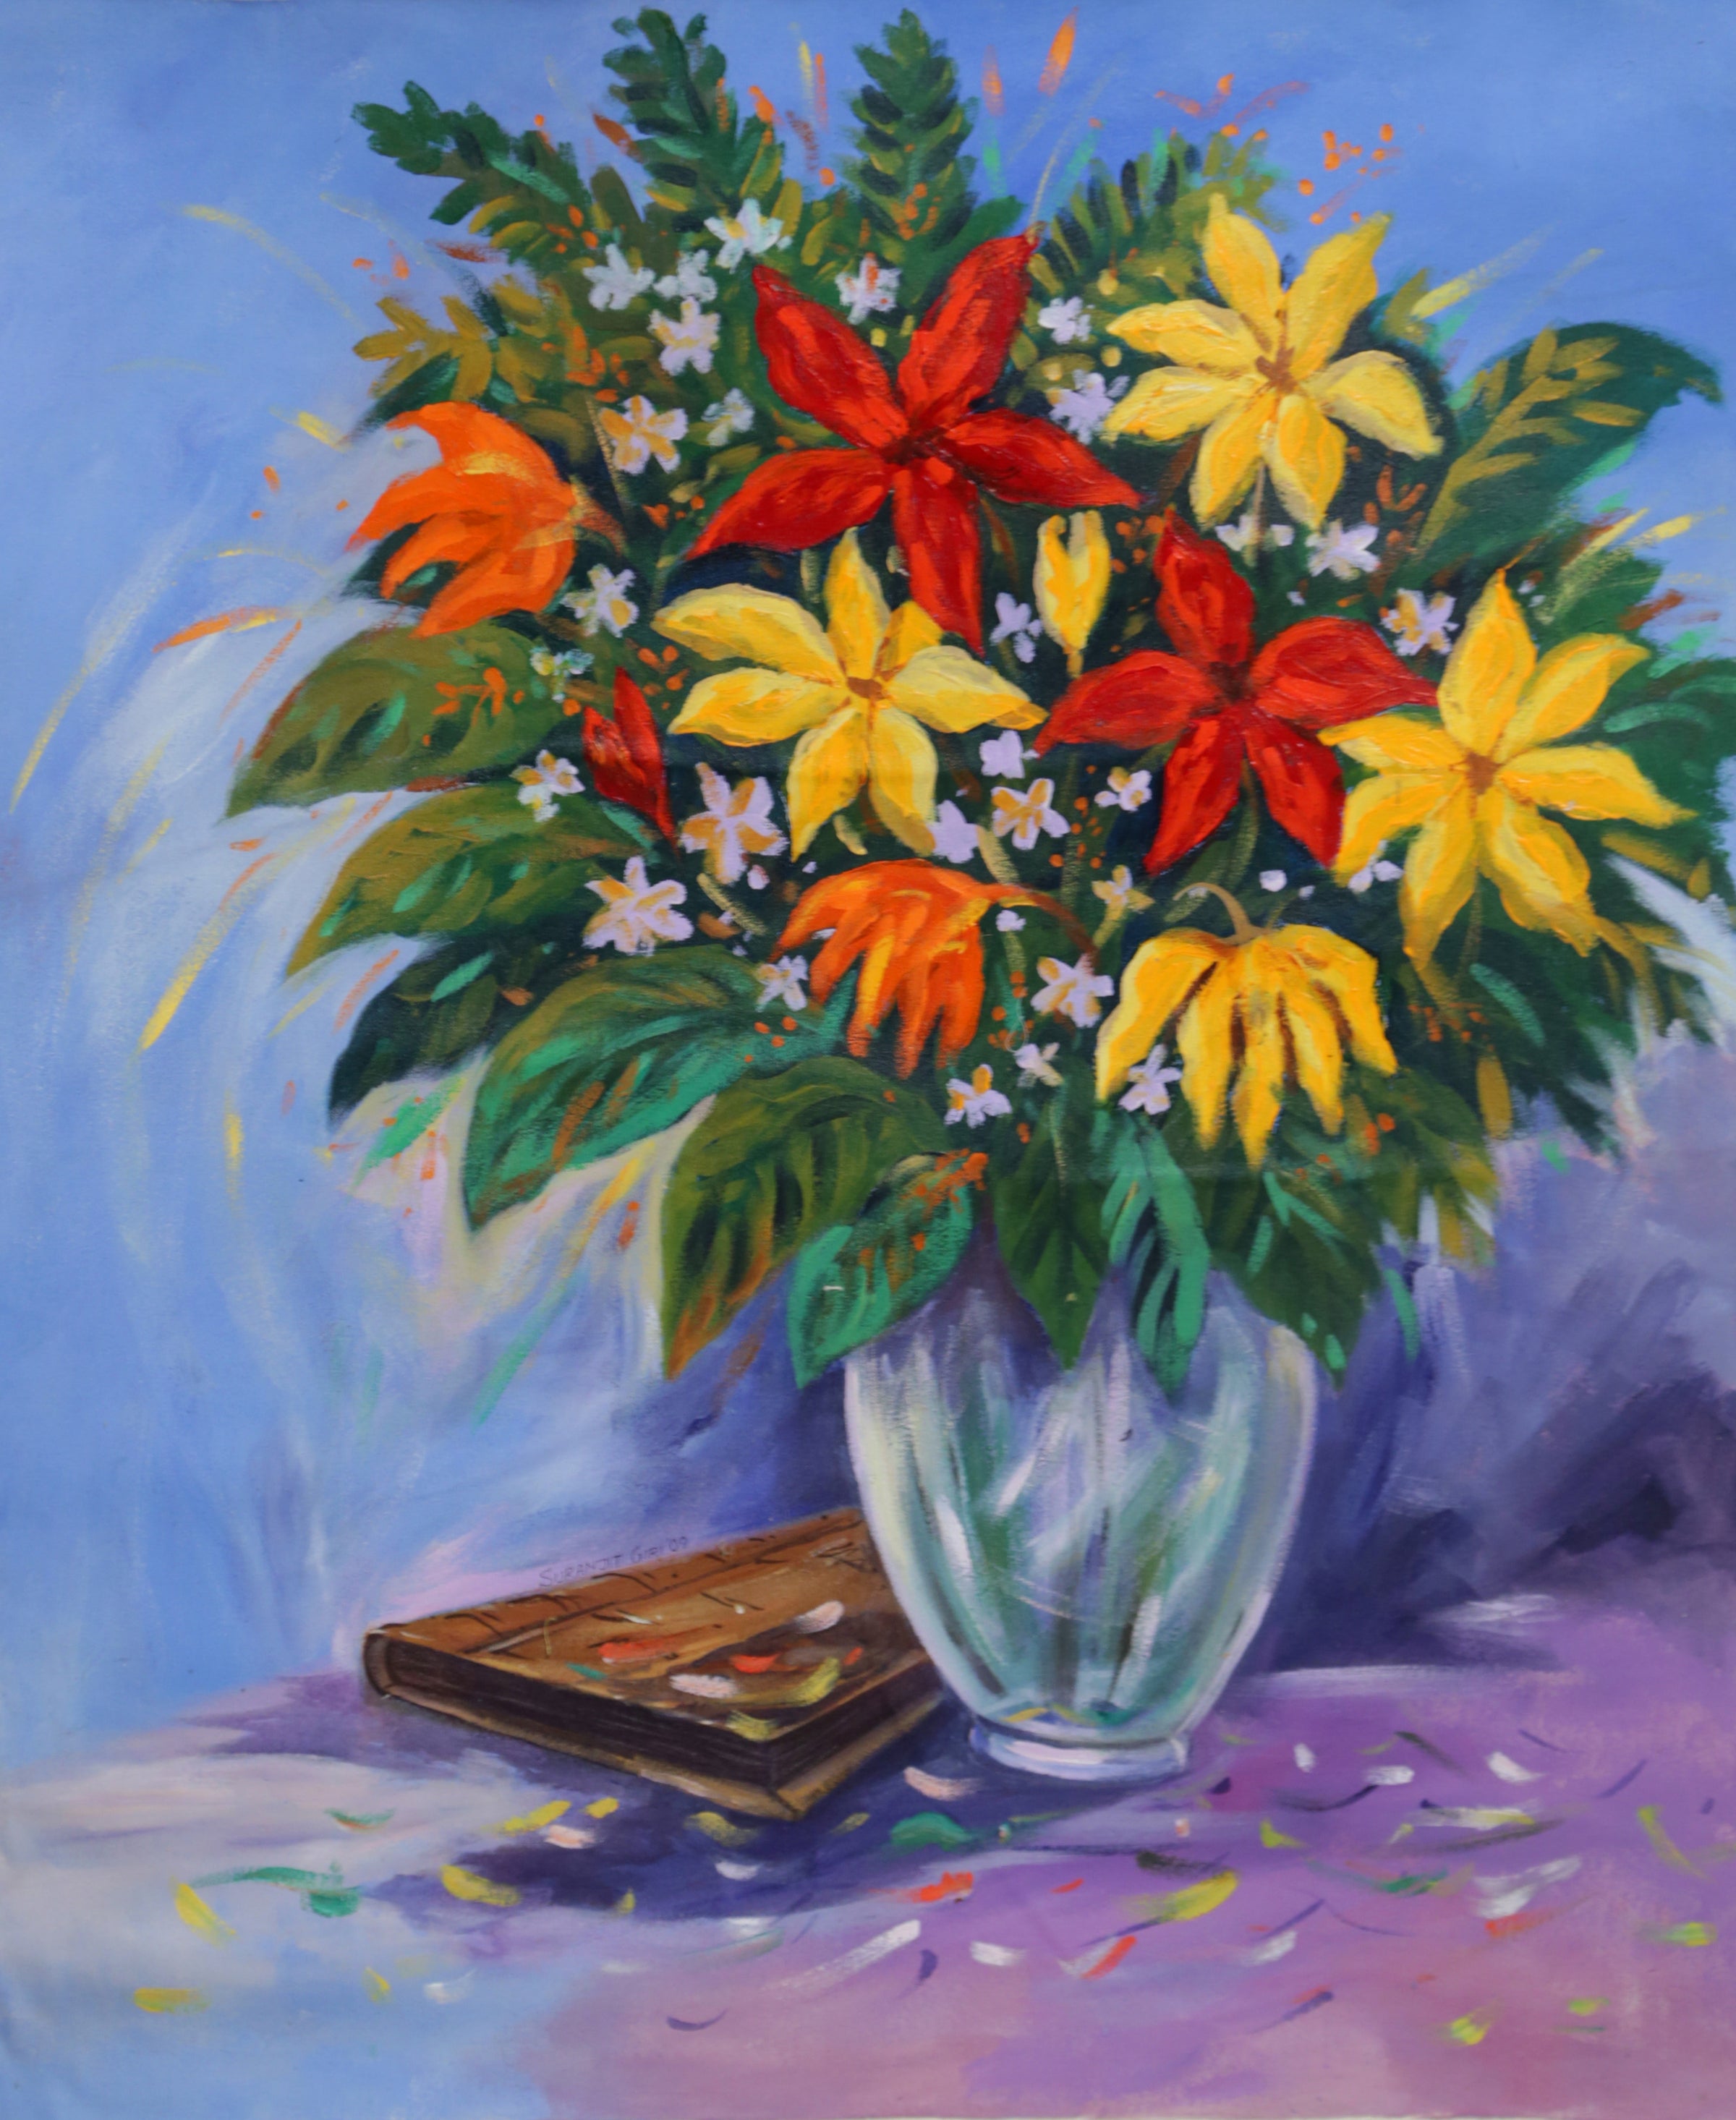 FLOWERS by Suranjit Giri | Oil painting - Canvas artwork